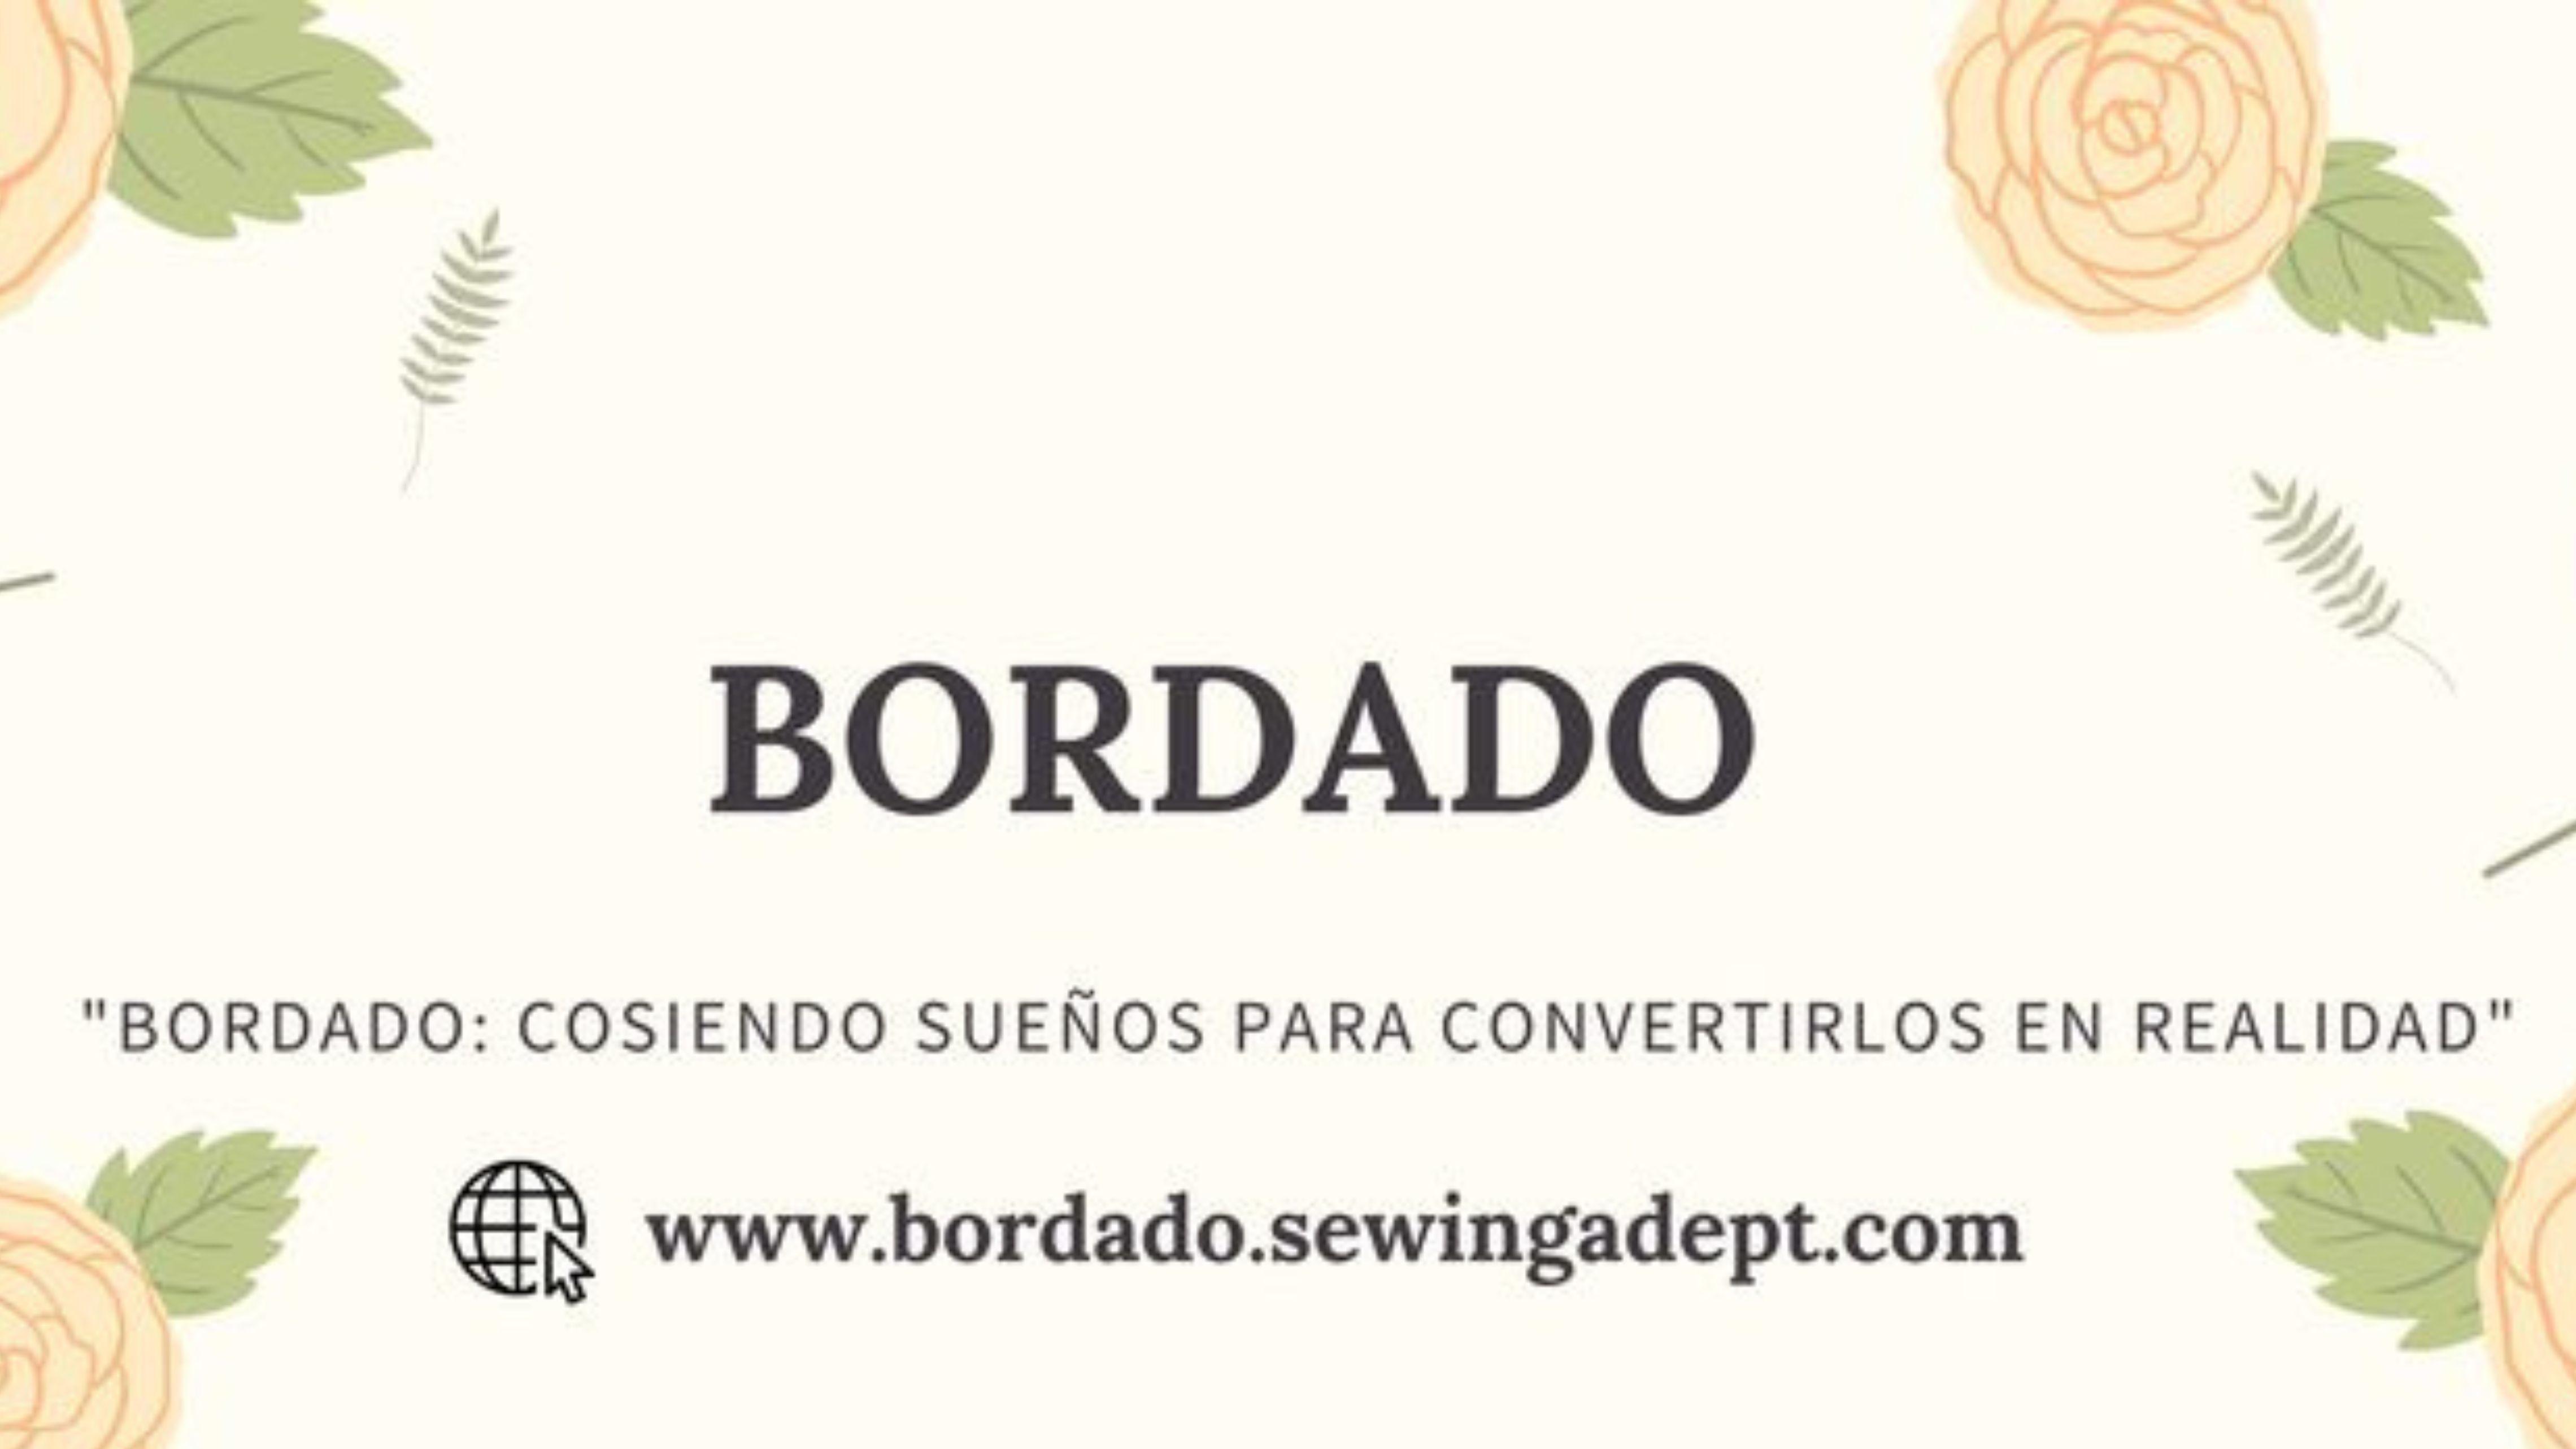 Bordado Sewingadept